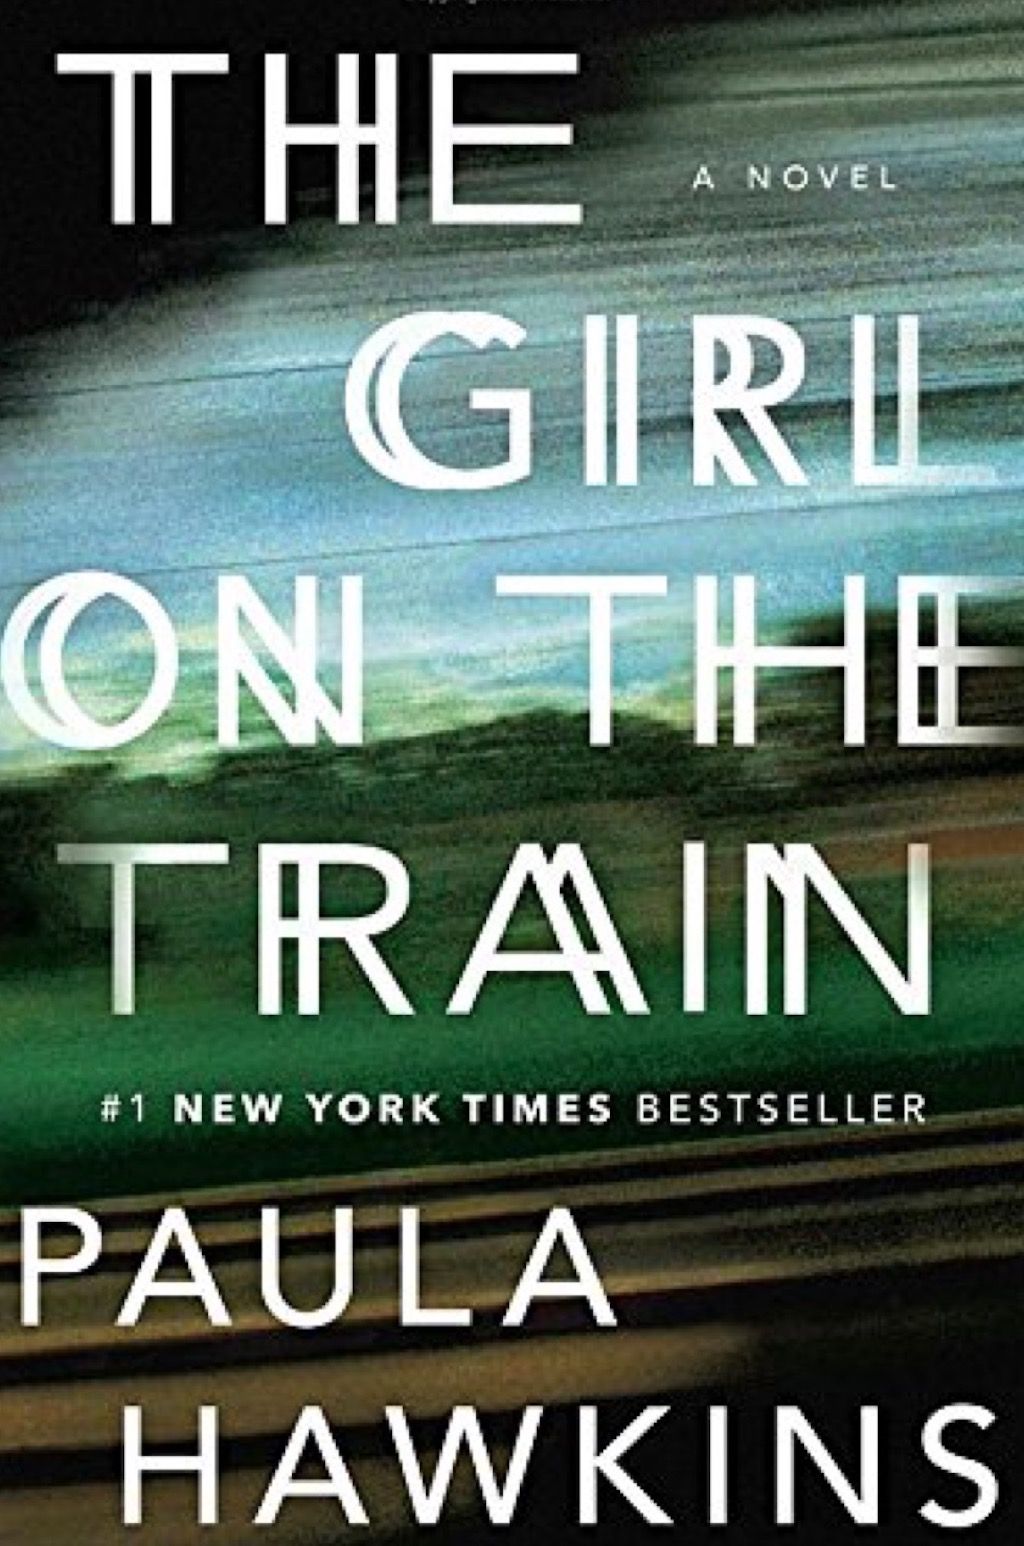 The Girl on the Train 책은 모든 여성이 40 대에 읽어야합니다.